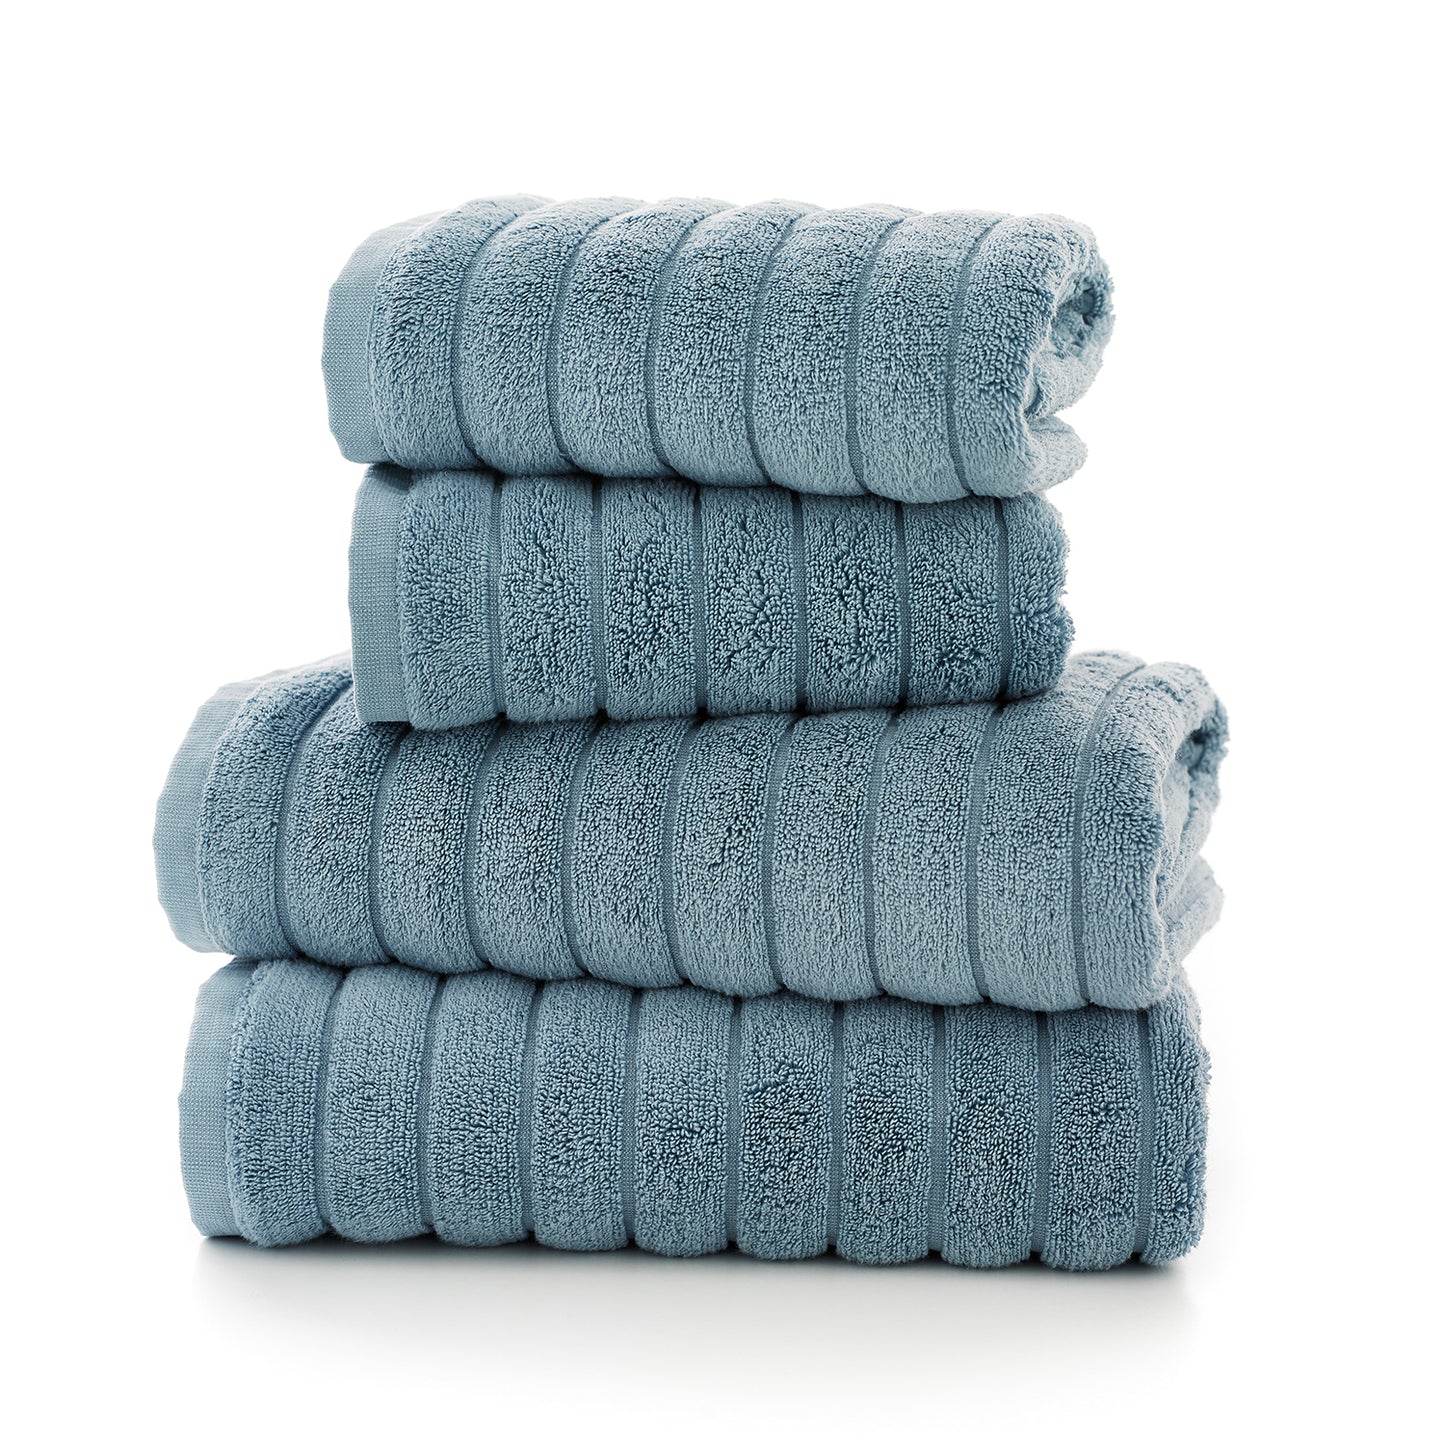 The Lyndon Company Ribbleton 700gsm Zero Twist Blue Towels